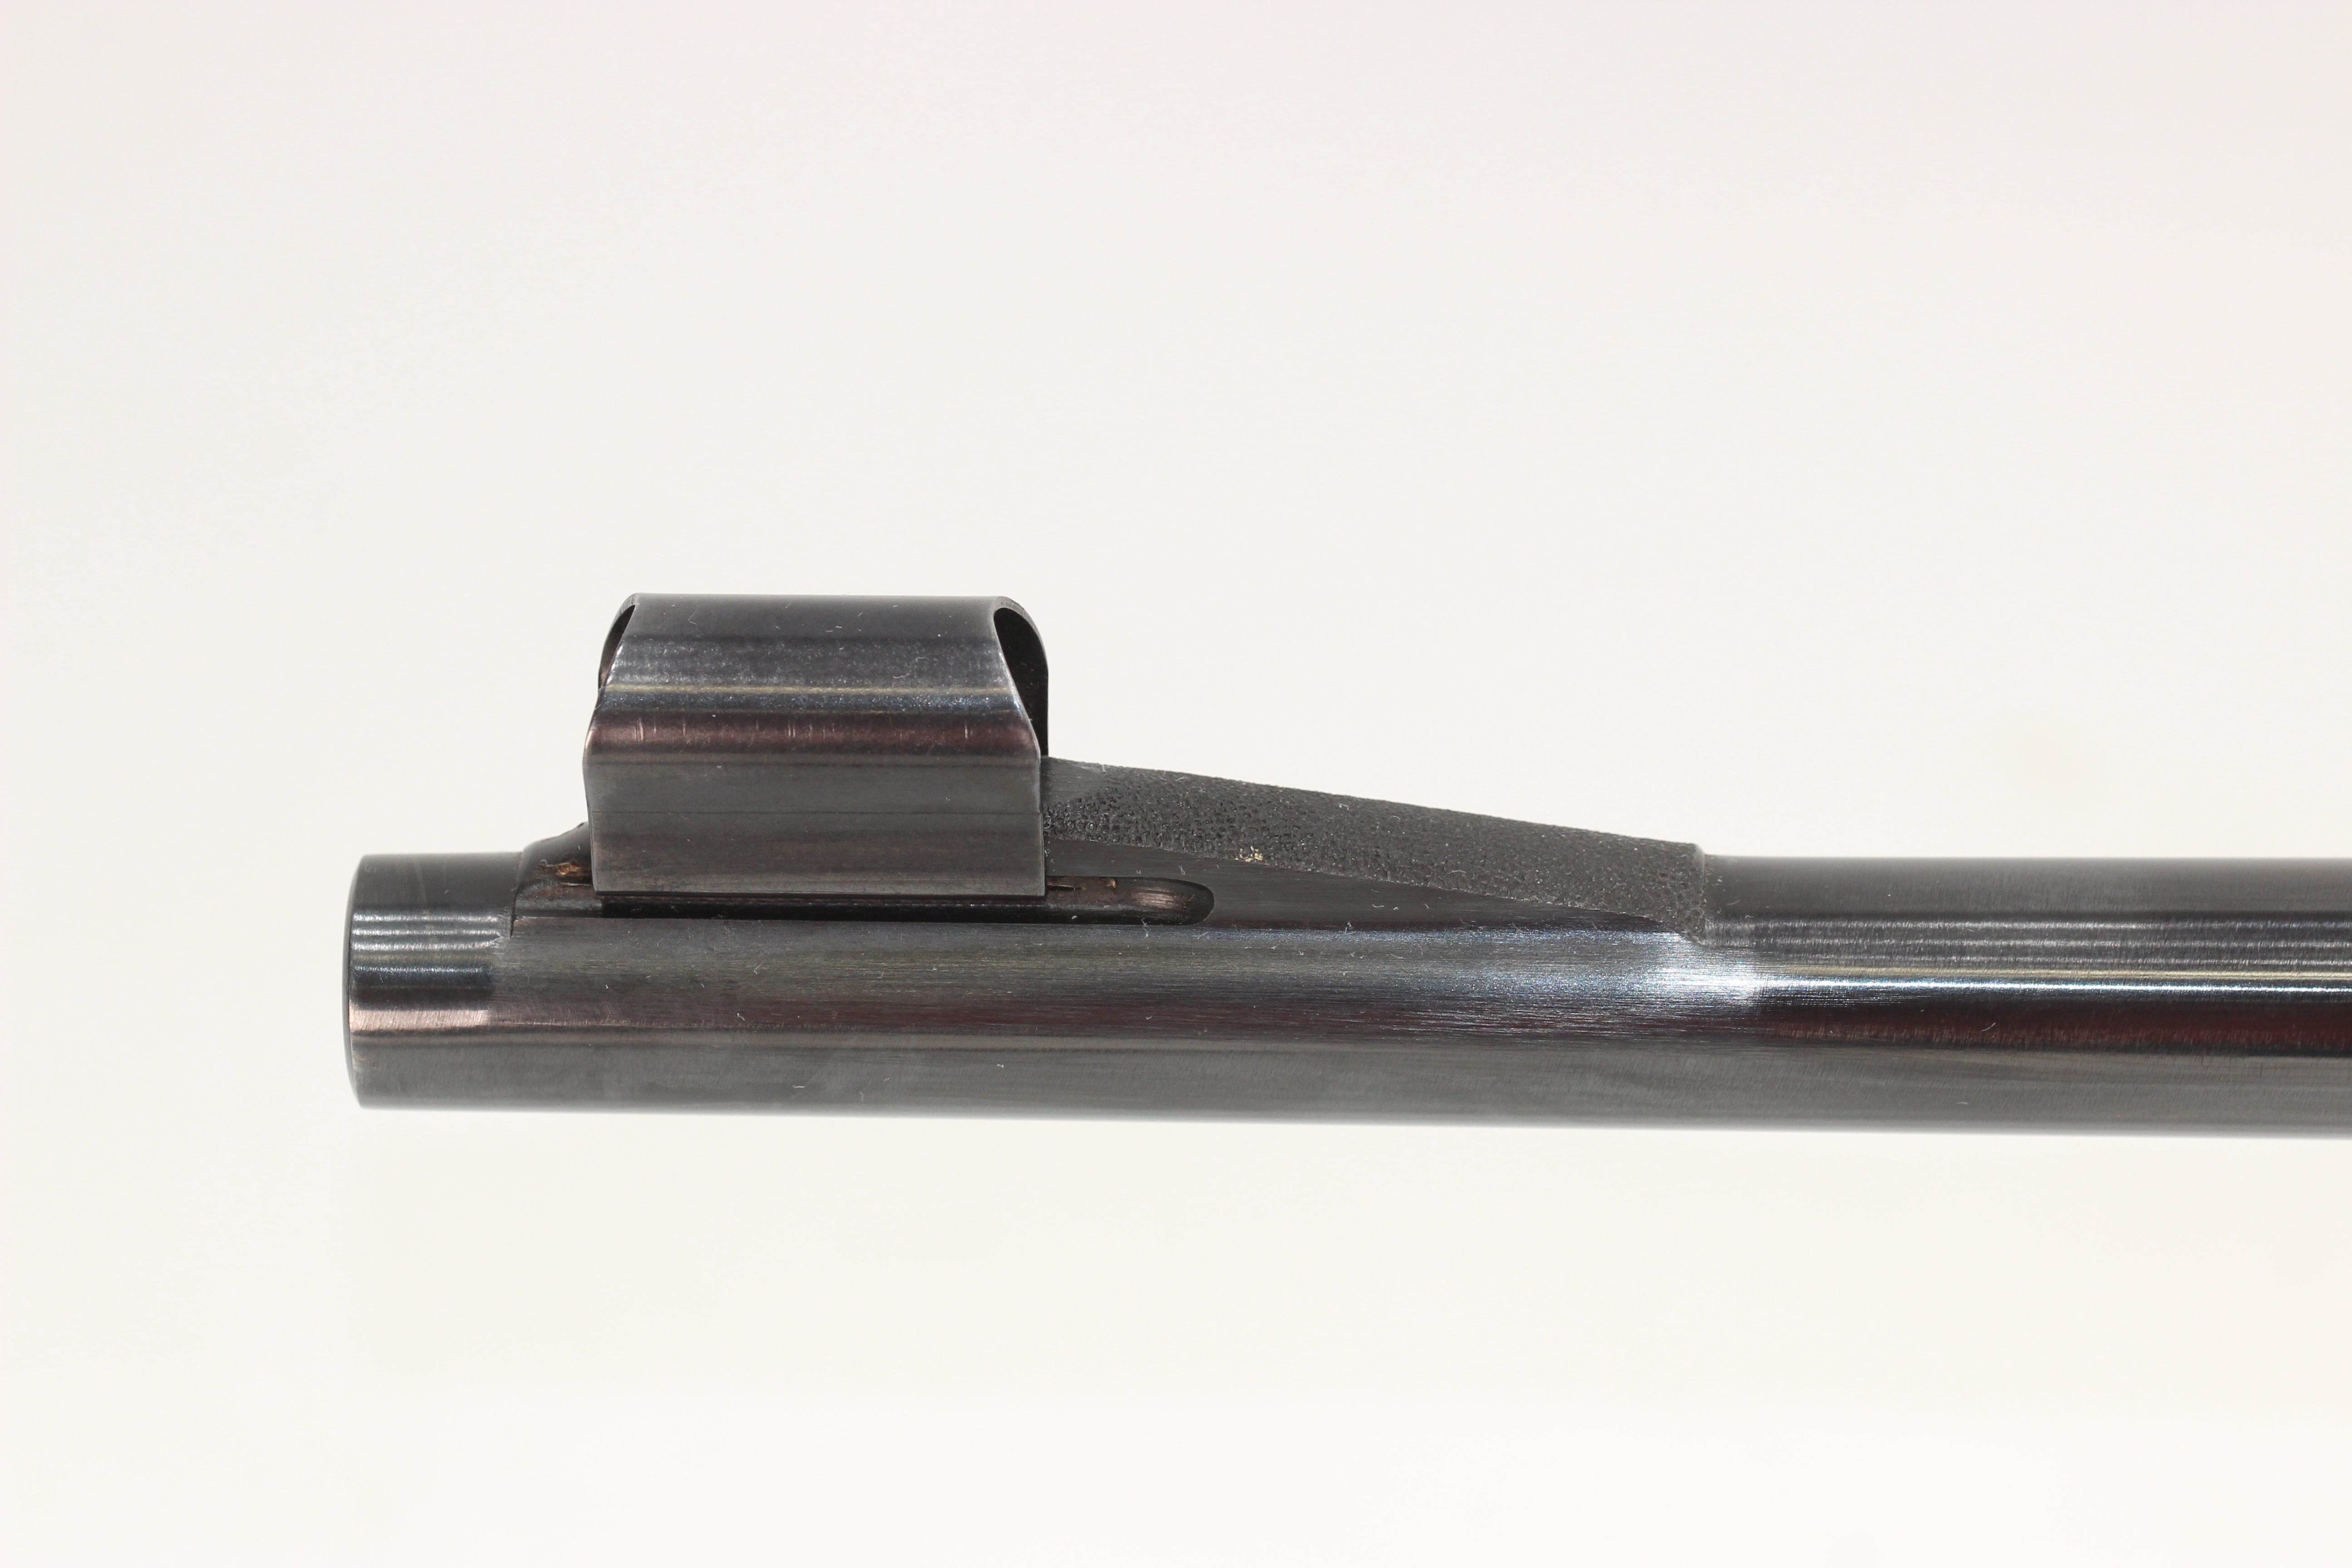 .30 Gov't '06 Standard Rifle - 1947